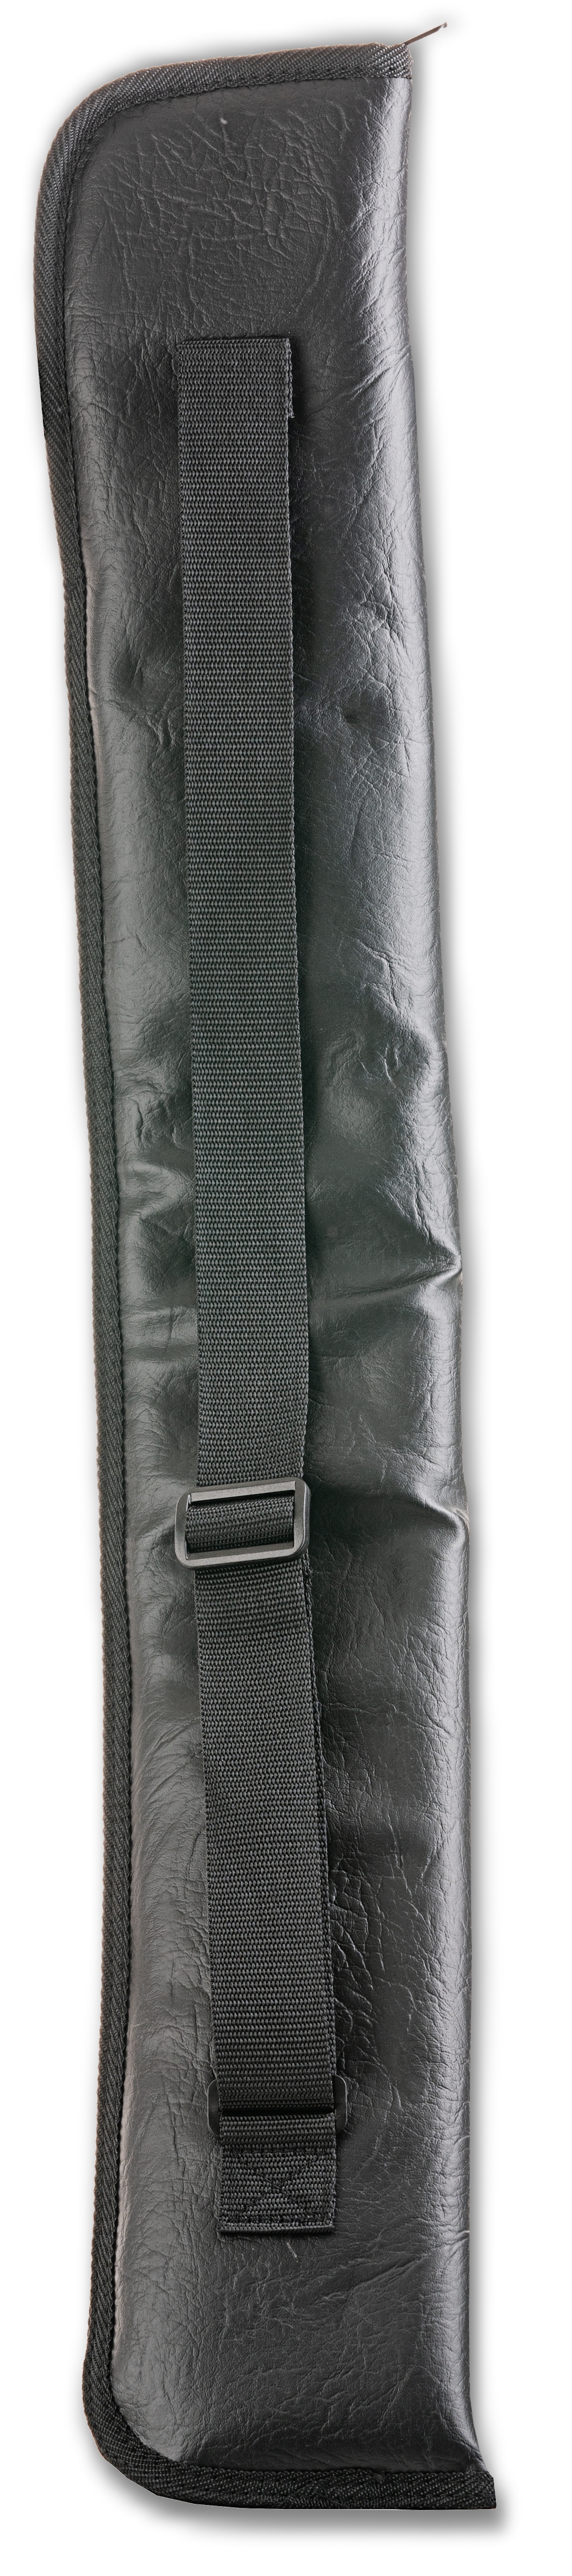 Cue bag J. Parker 2/2 imitation leather